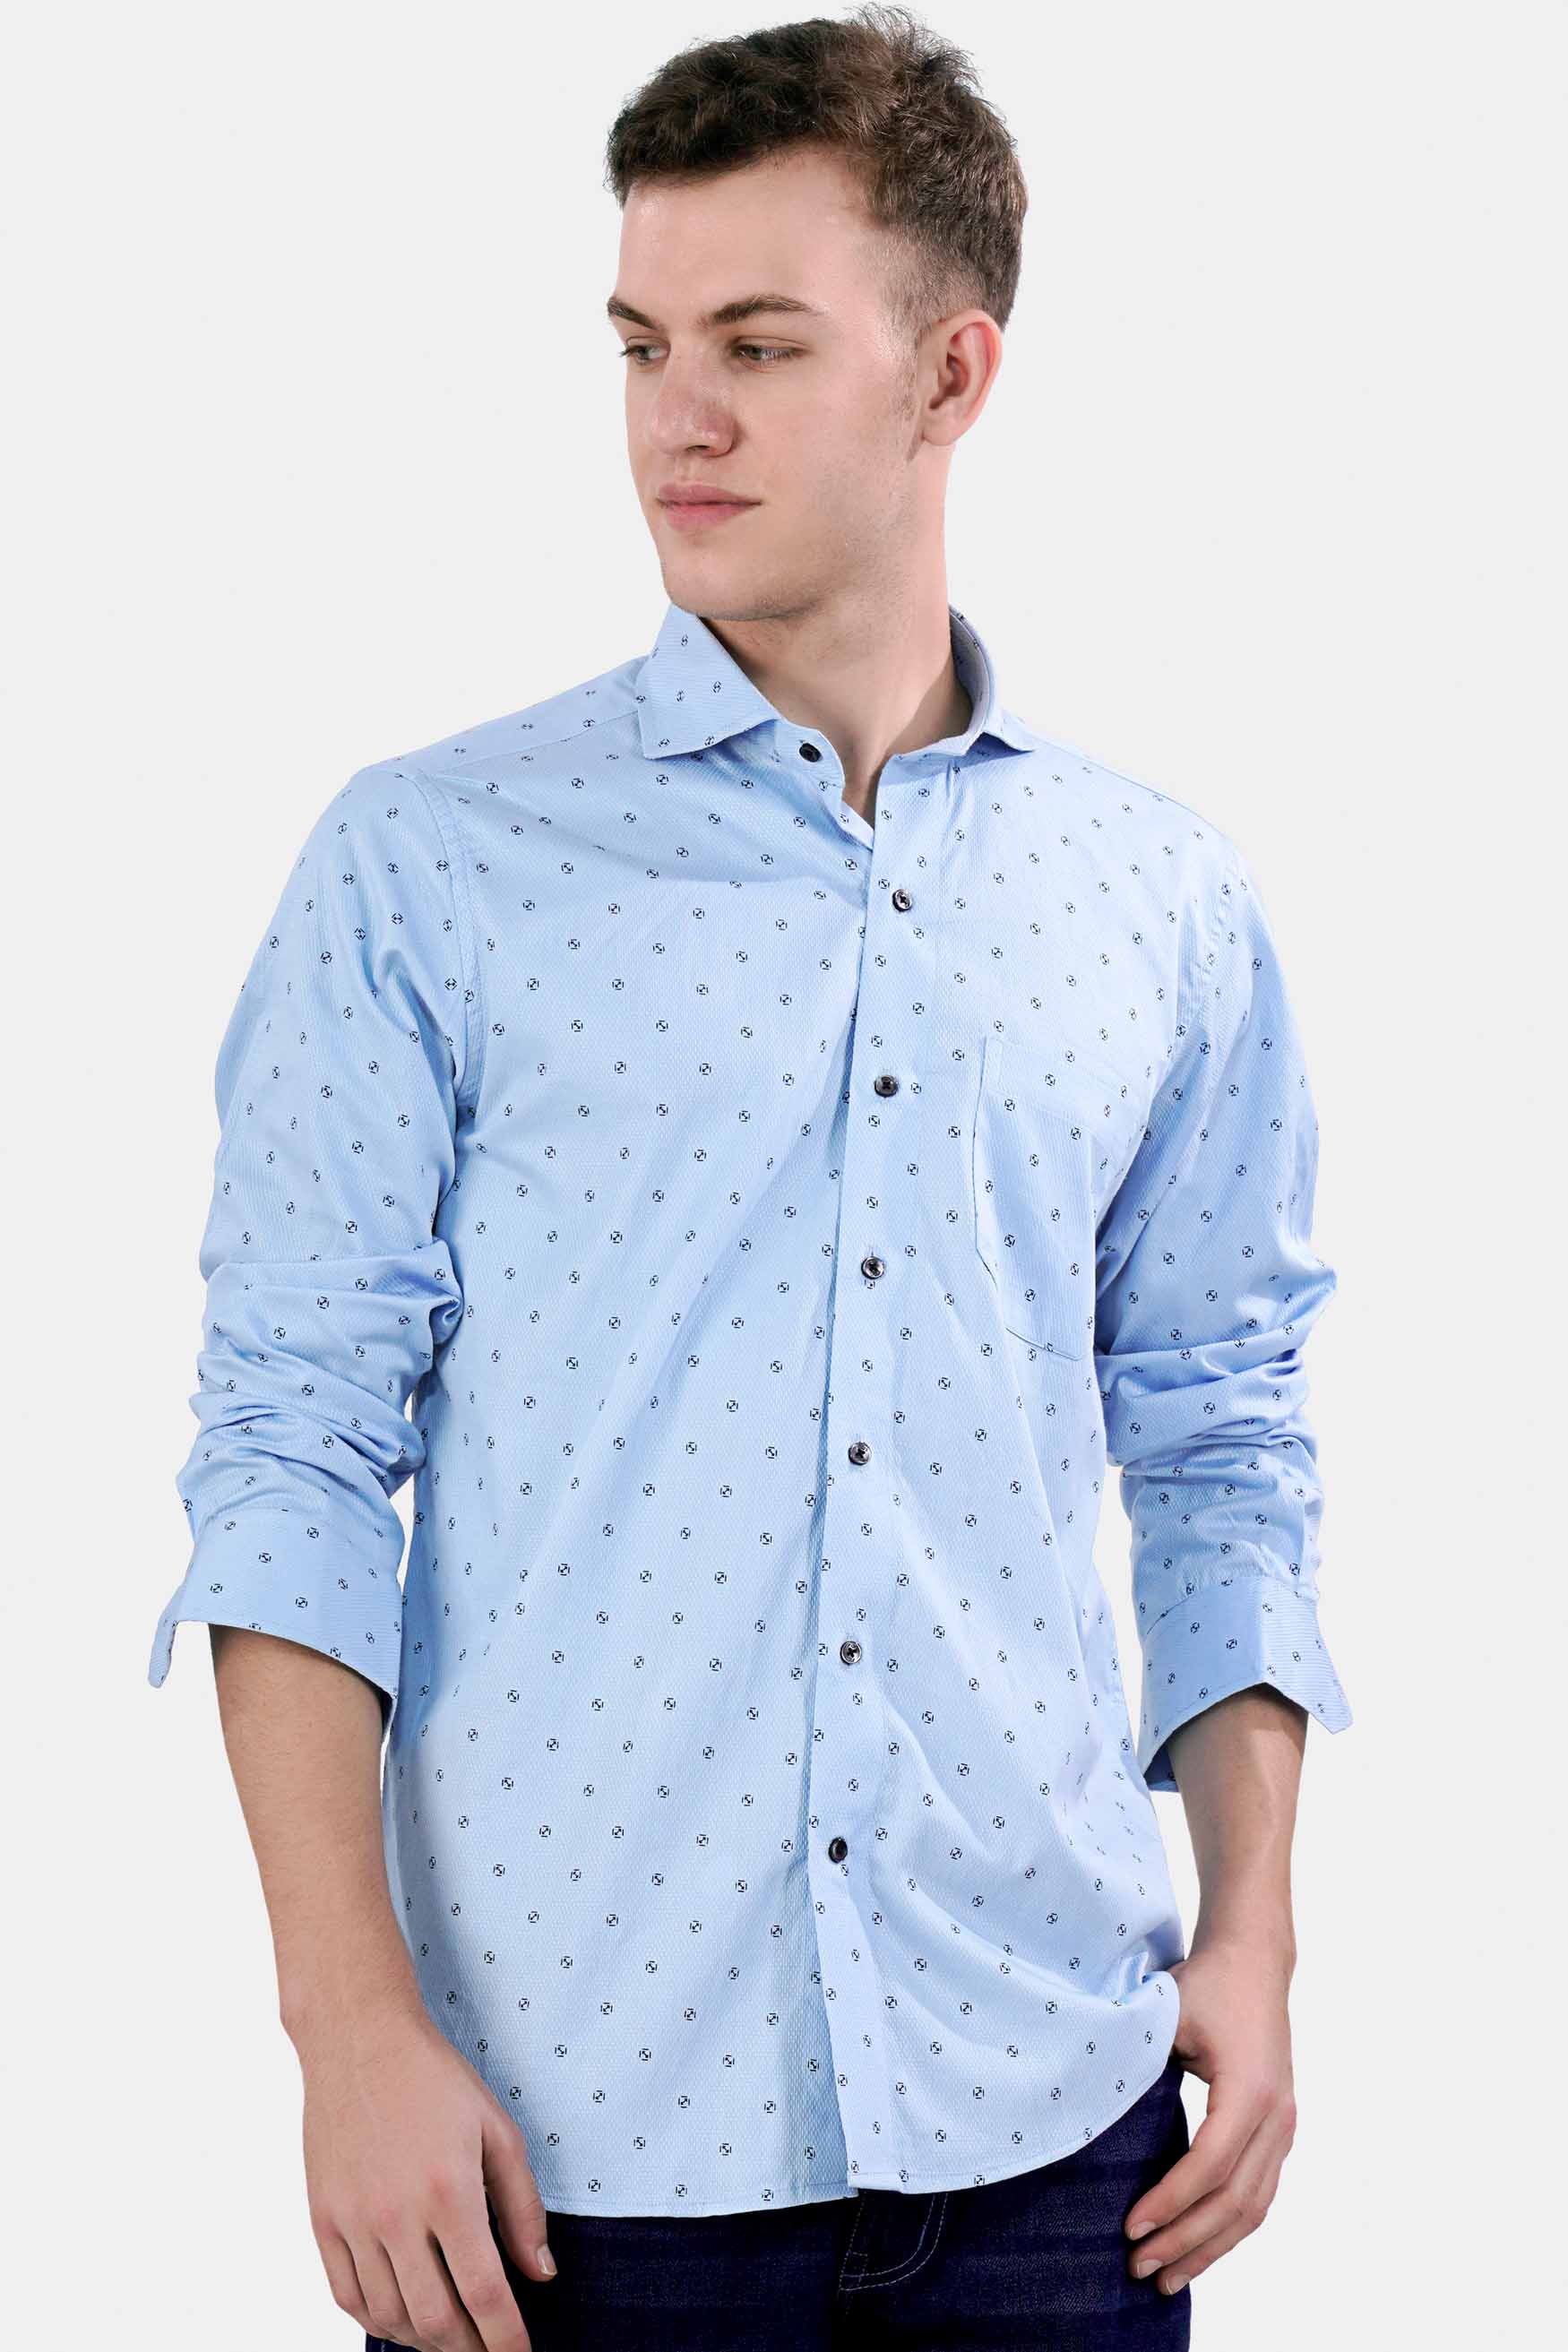 Carolina Blue Dobby Textured Premium Giza Cotton Shirt